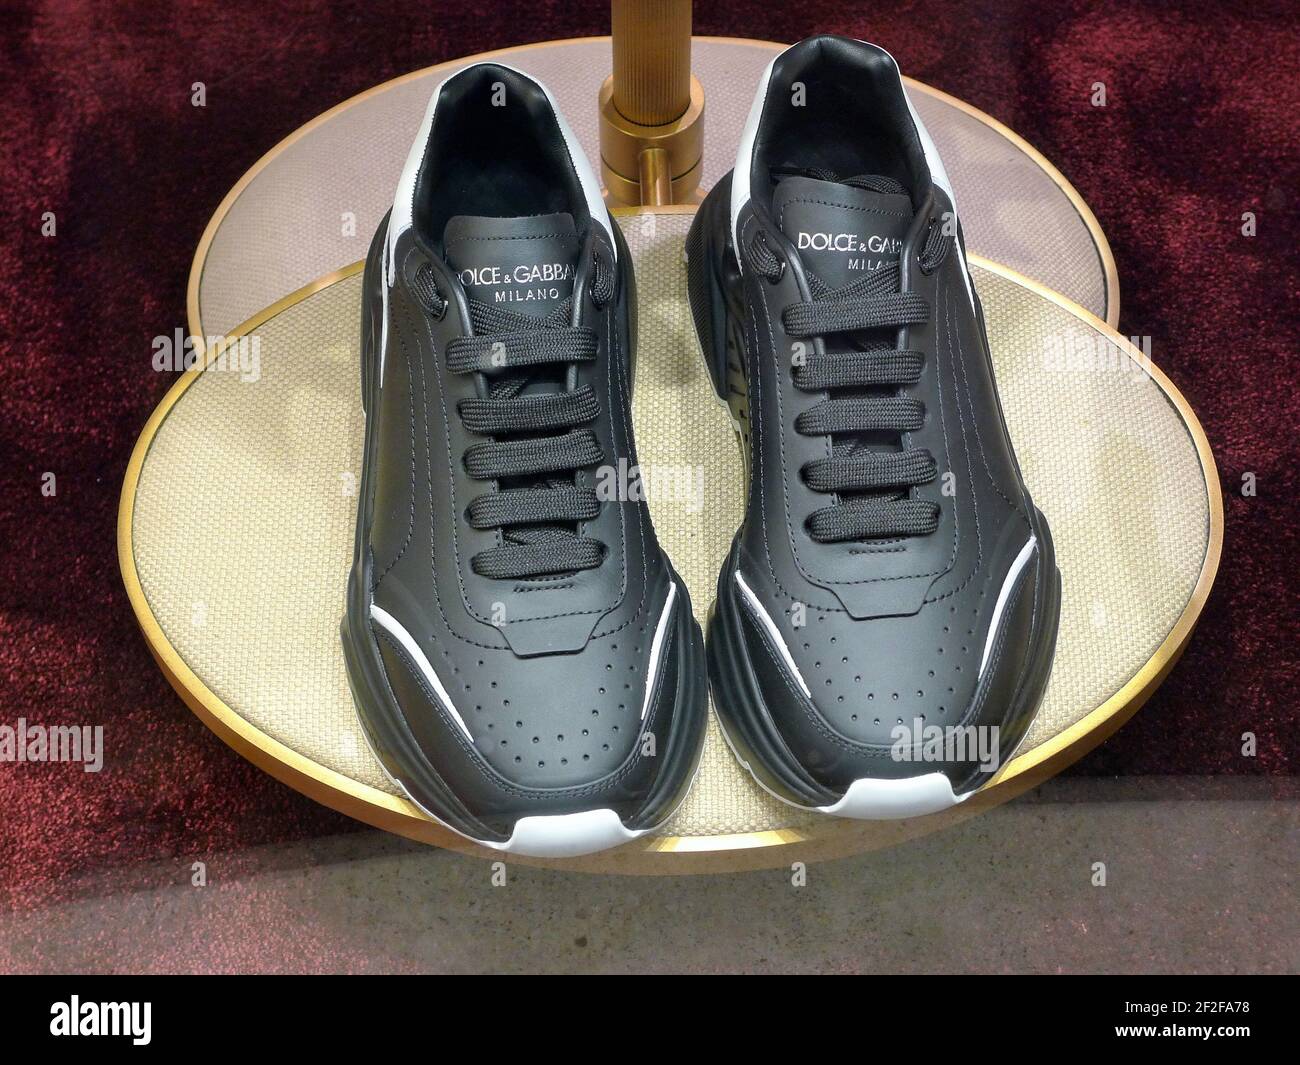 Dolce Gabbana shoes - Good investment? | Styleforum